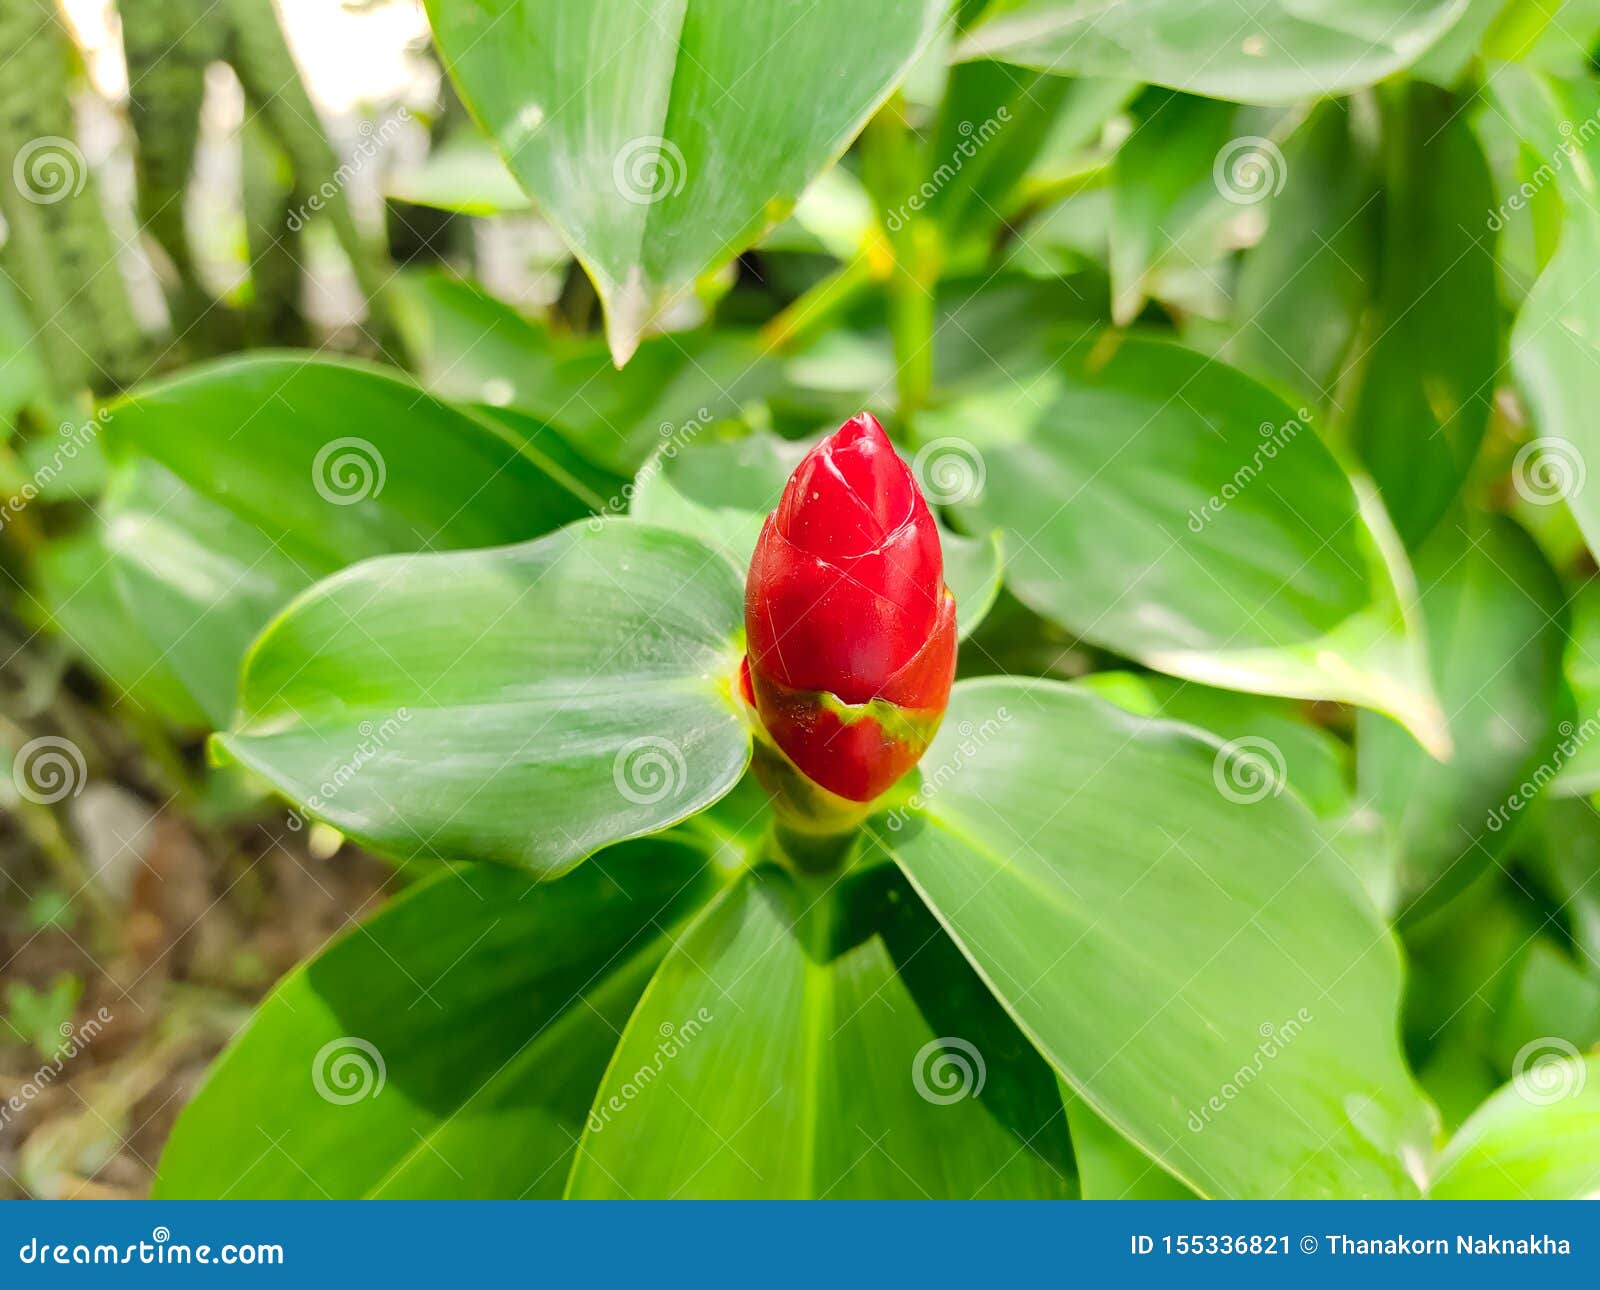 costus is flowering red in the garden green leaves blooming